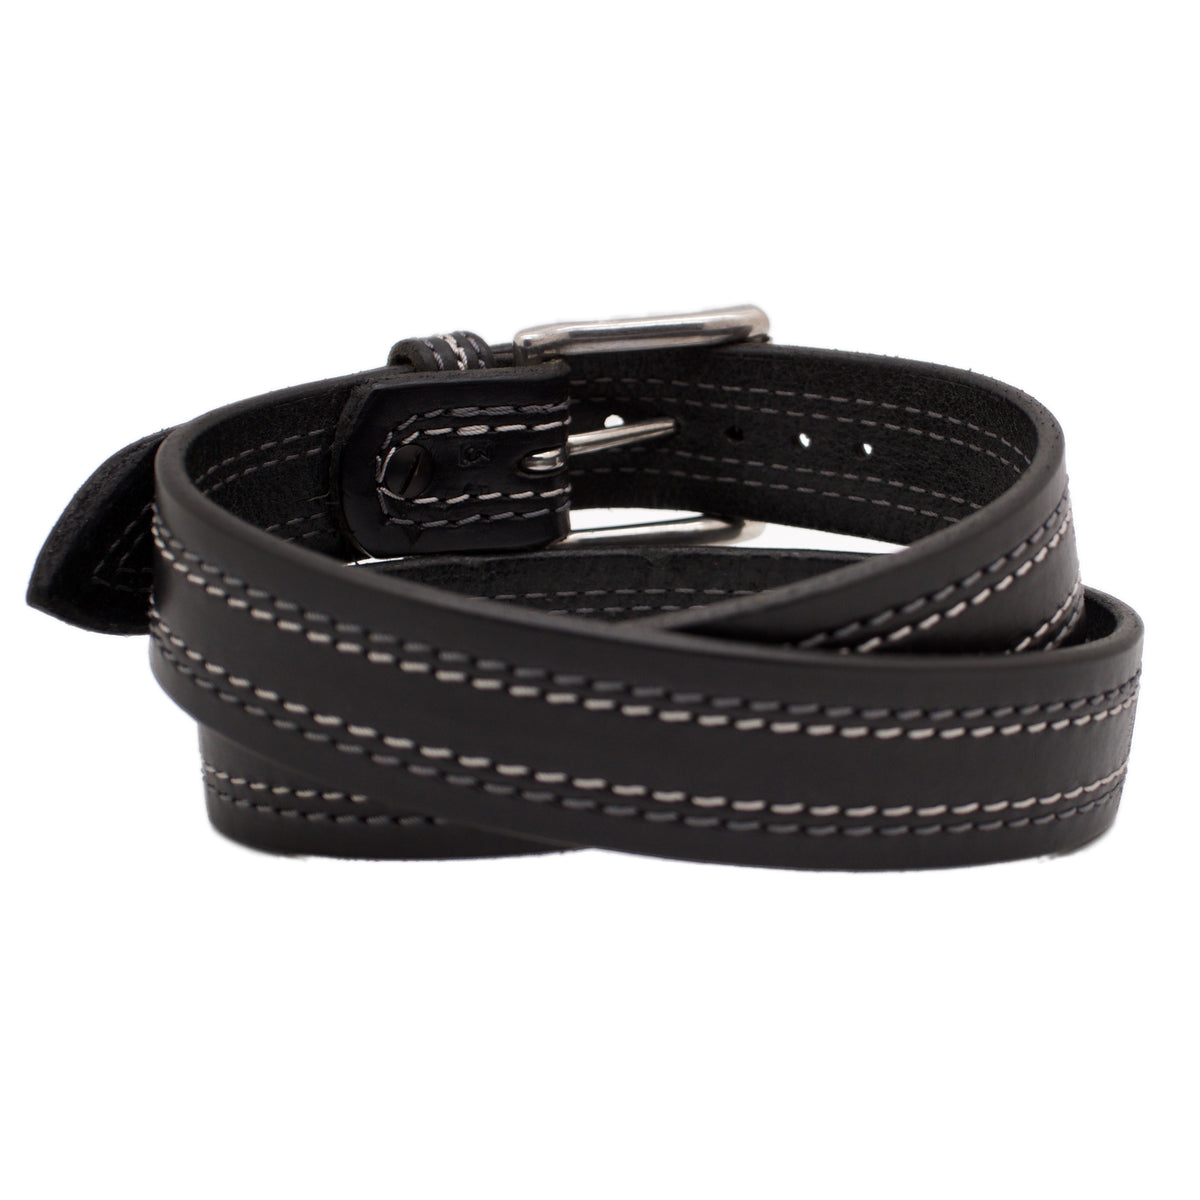 The TESLA WIDE 1.75 Leather Belt